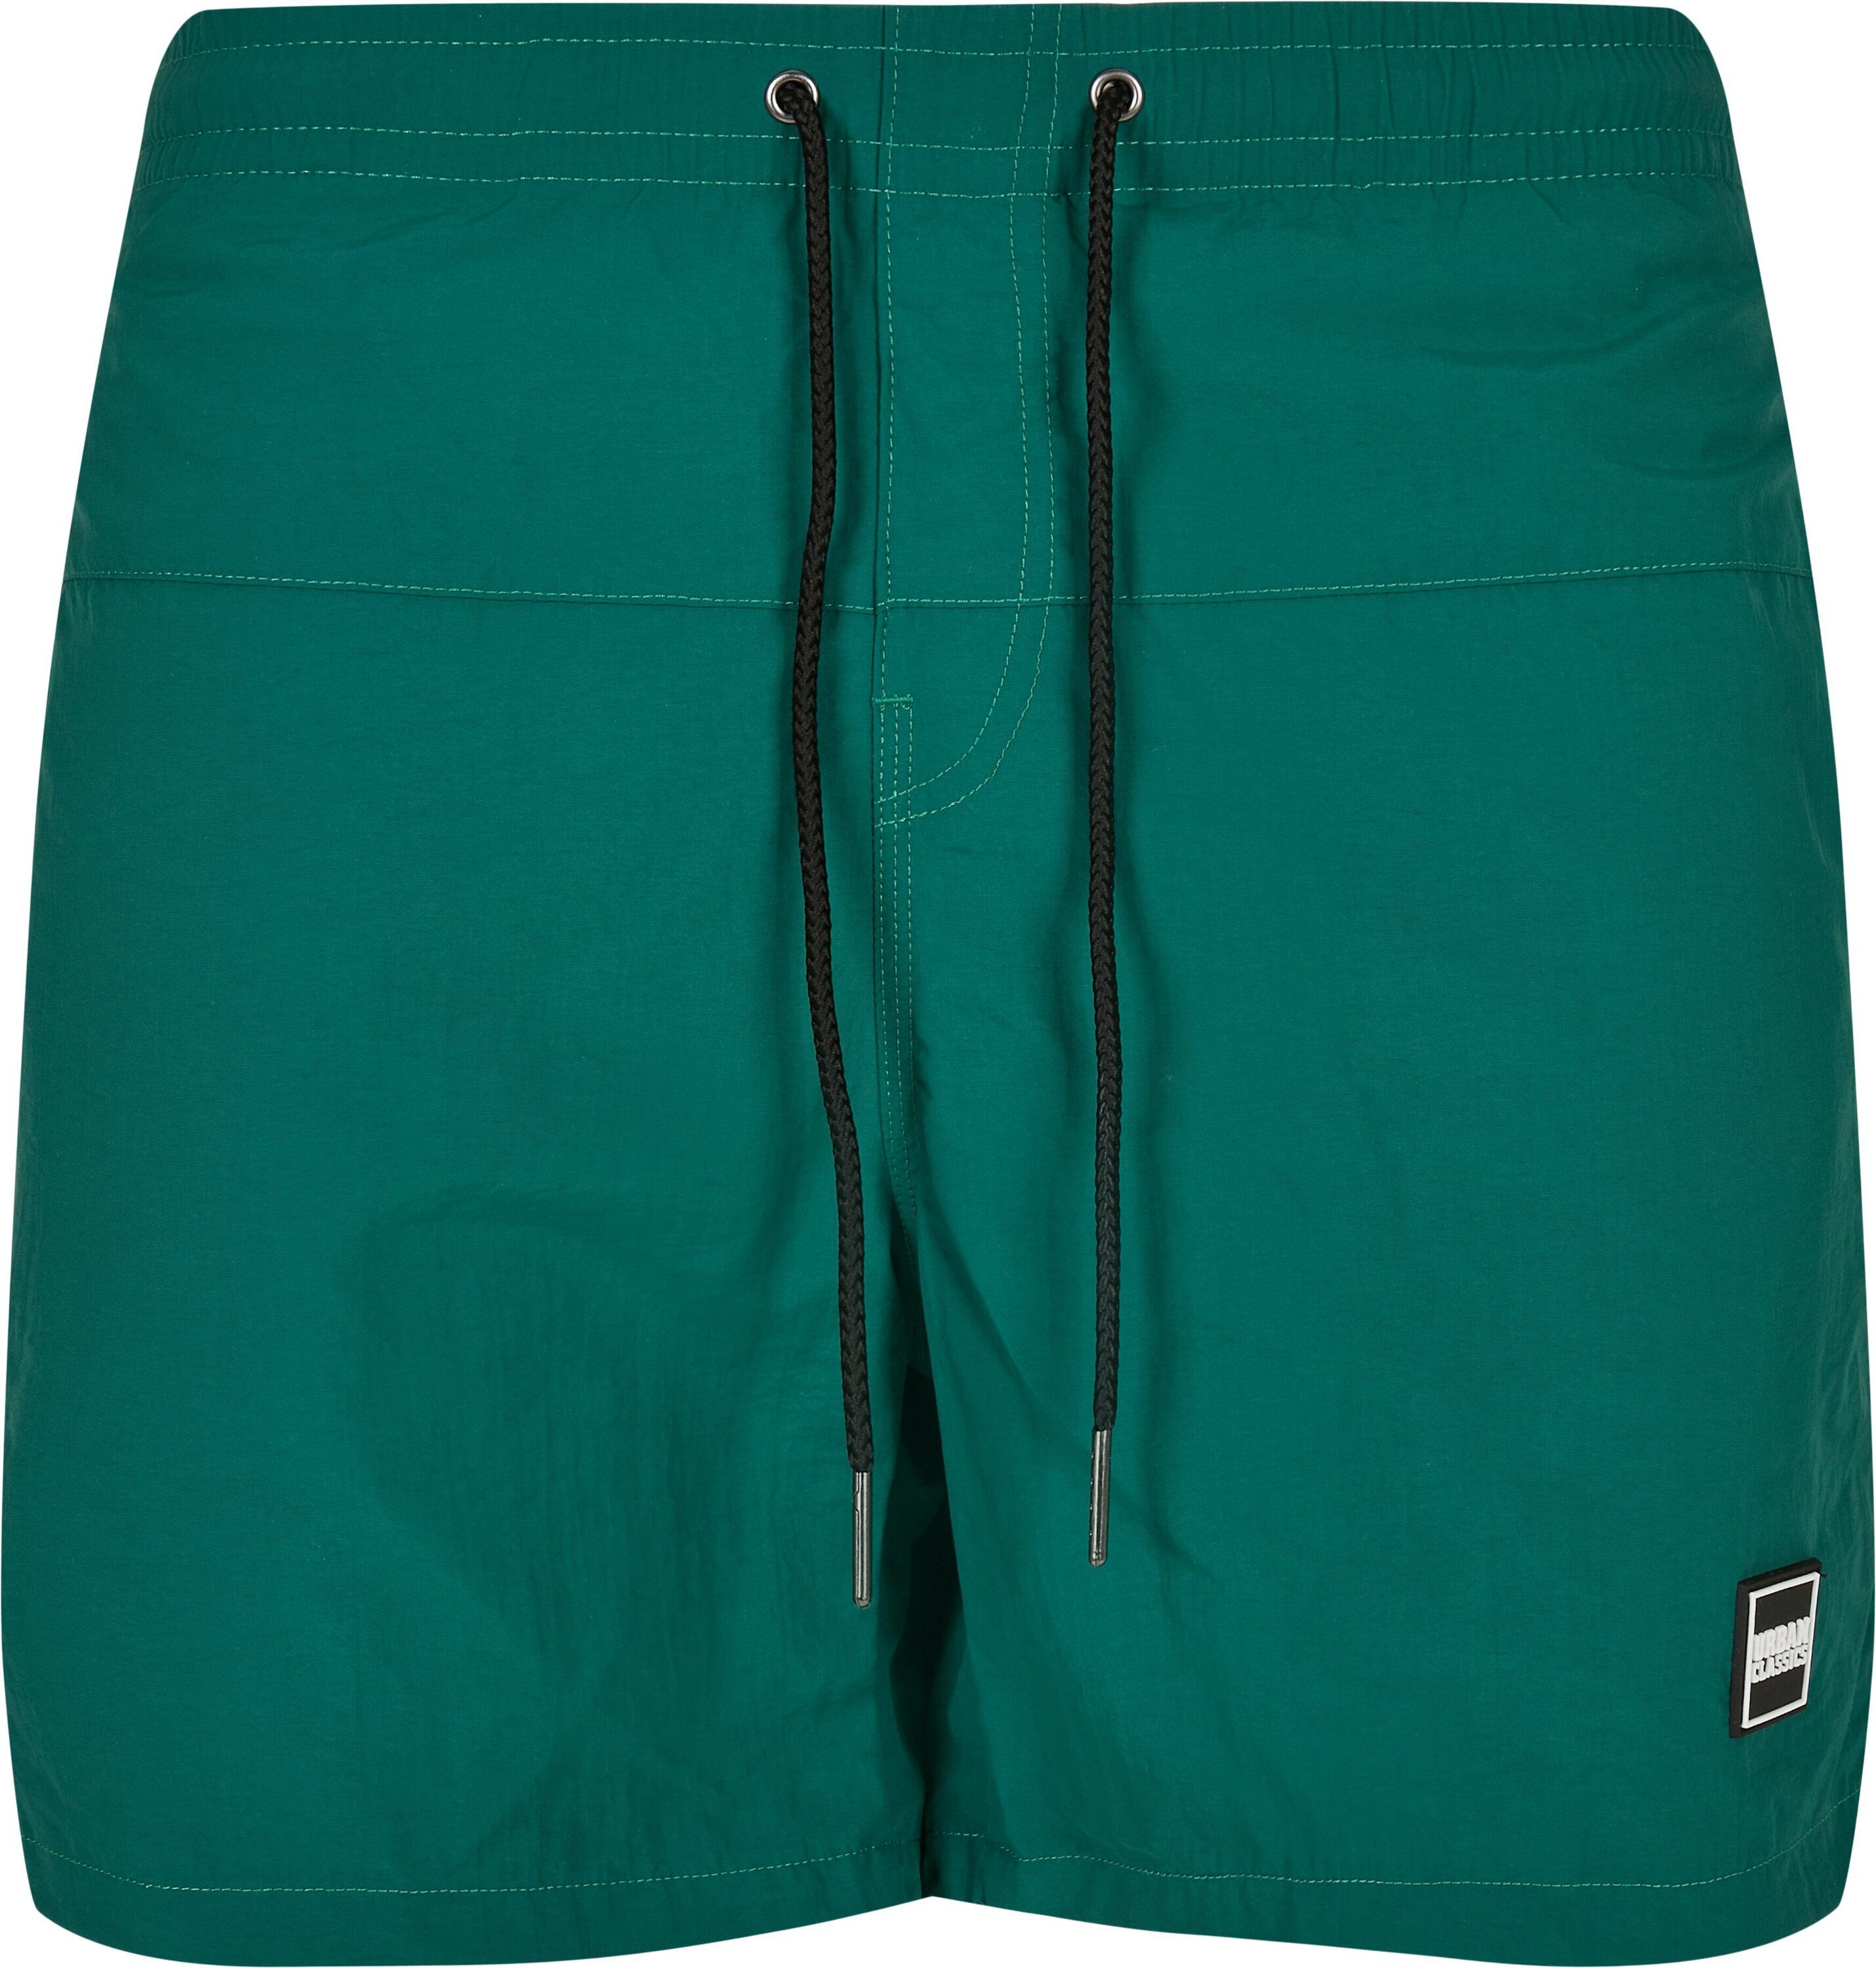 URBAN CLASSICS Badeshorts Herren Swim Shorts green